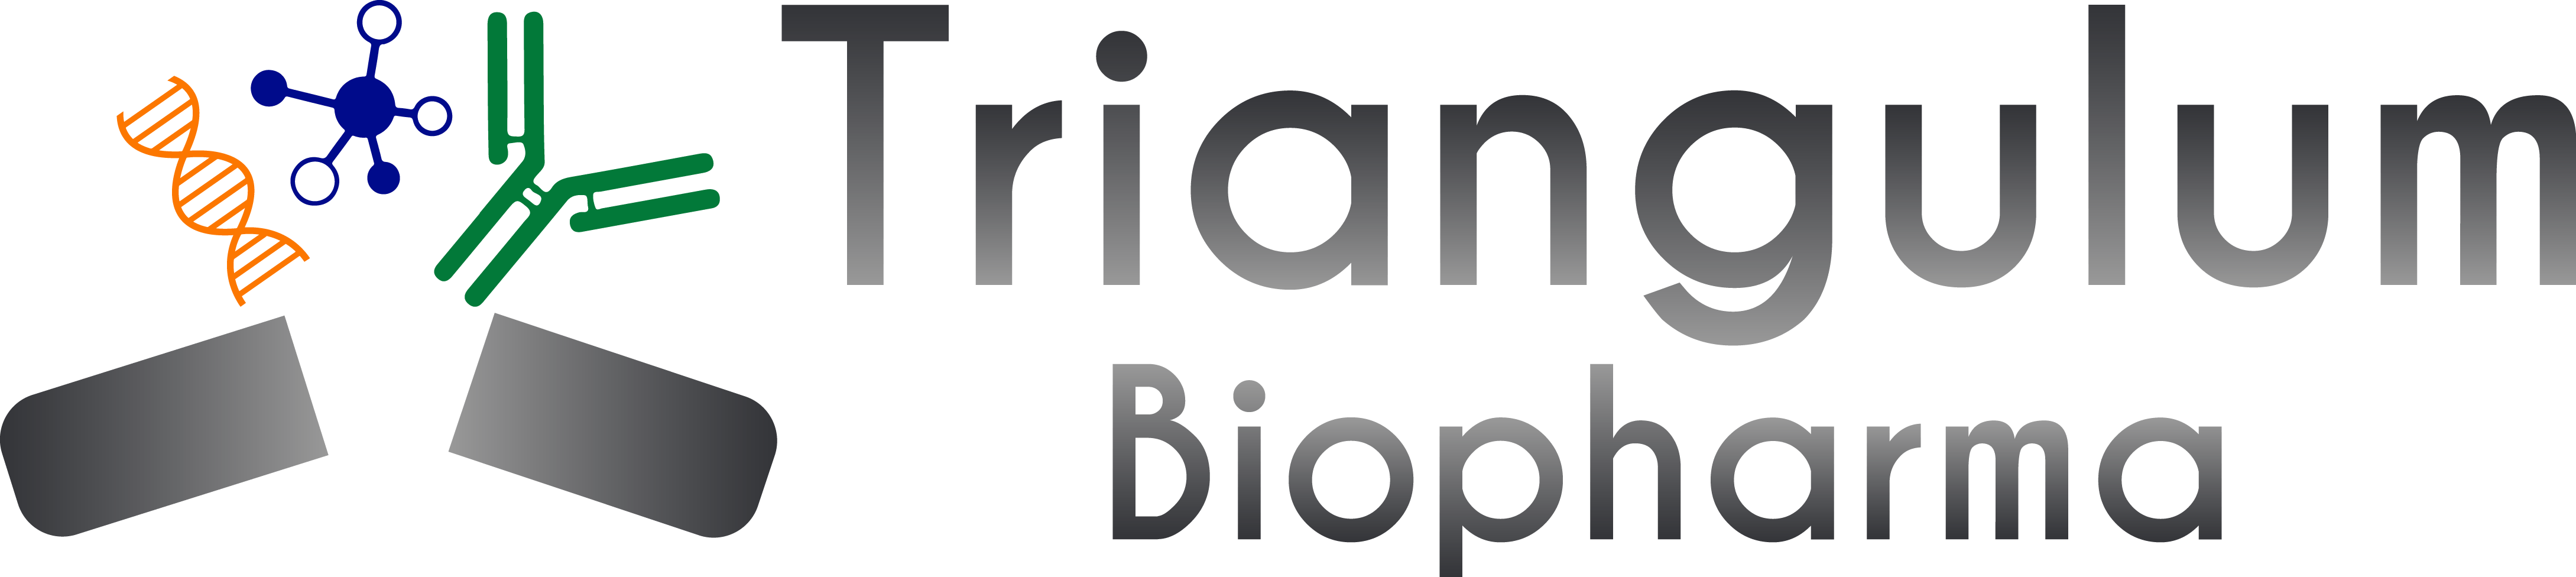 Biopharma Logo - Triangulum Biopharma